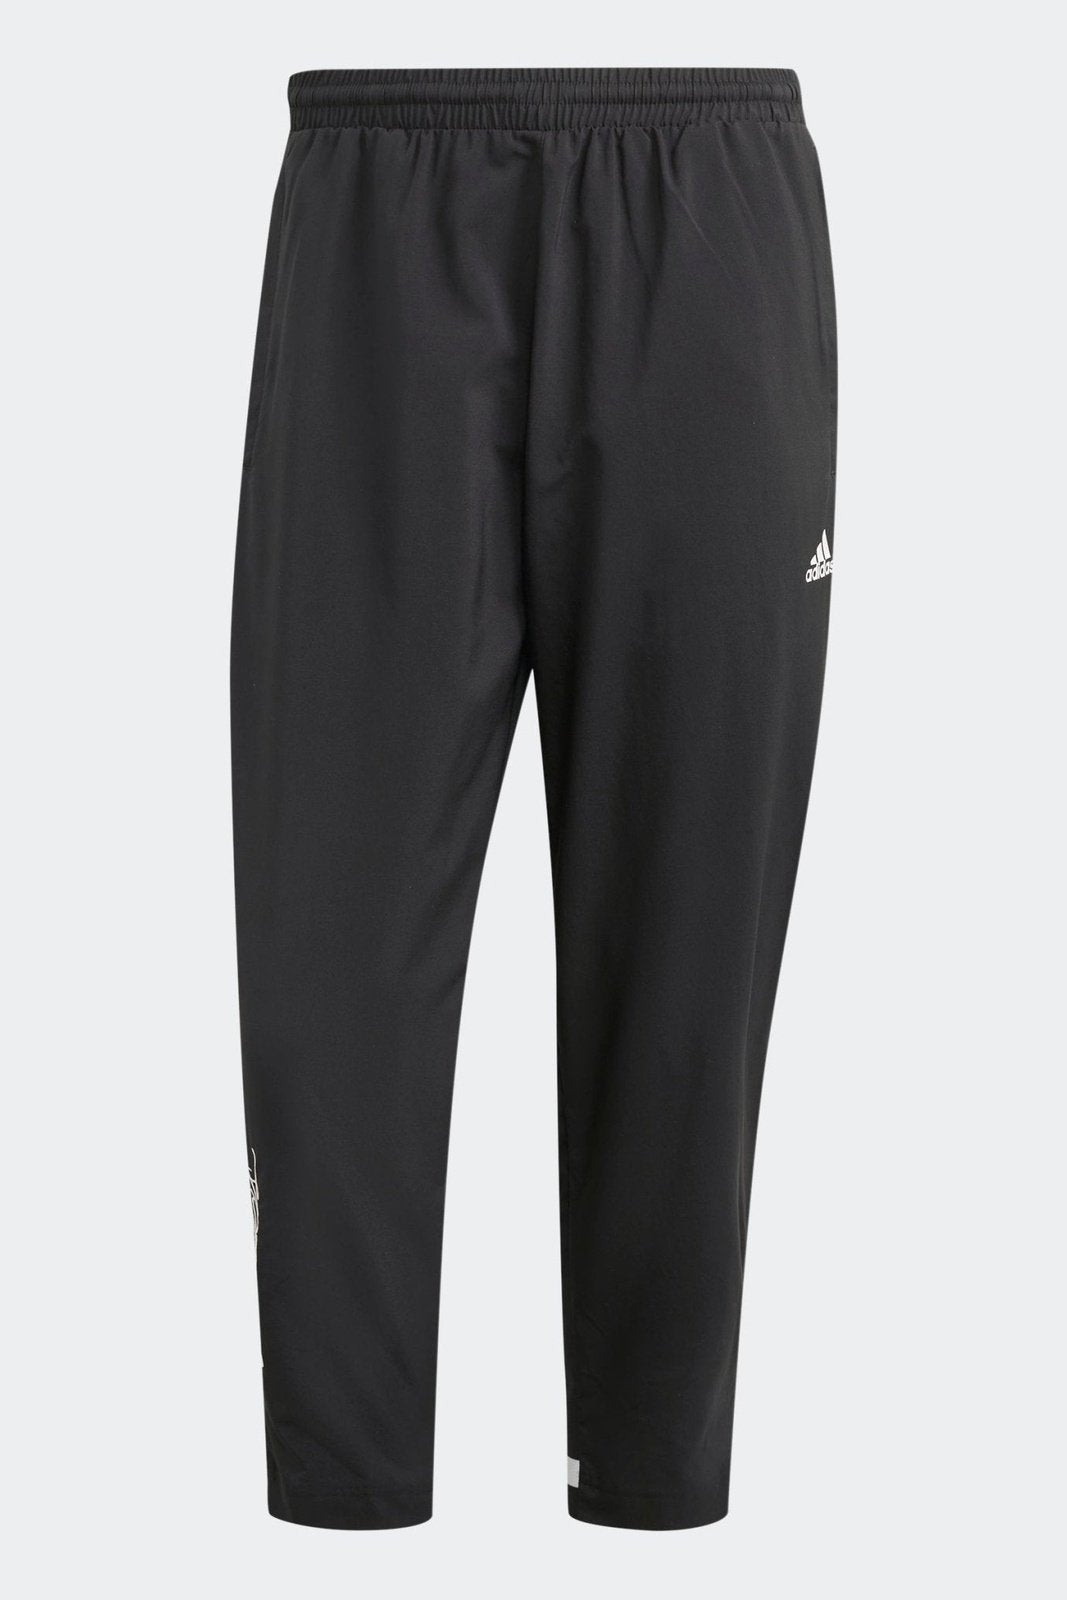 ADIDAS - מכנסיים ארוכים לגברים SCRIBBLE בצבע שחור - MASHBIR//365